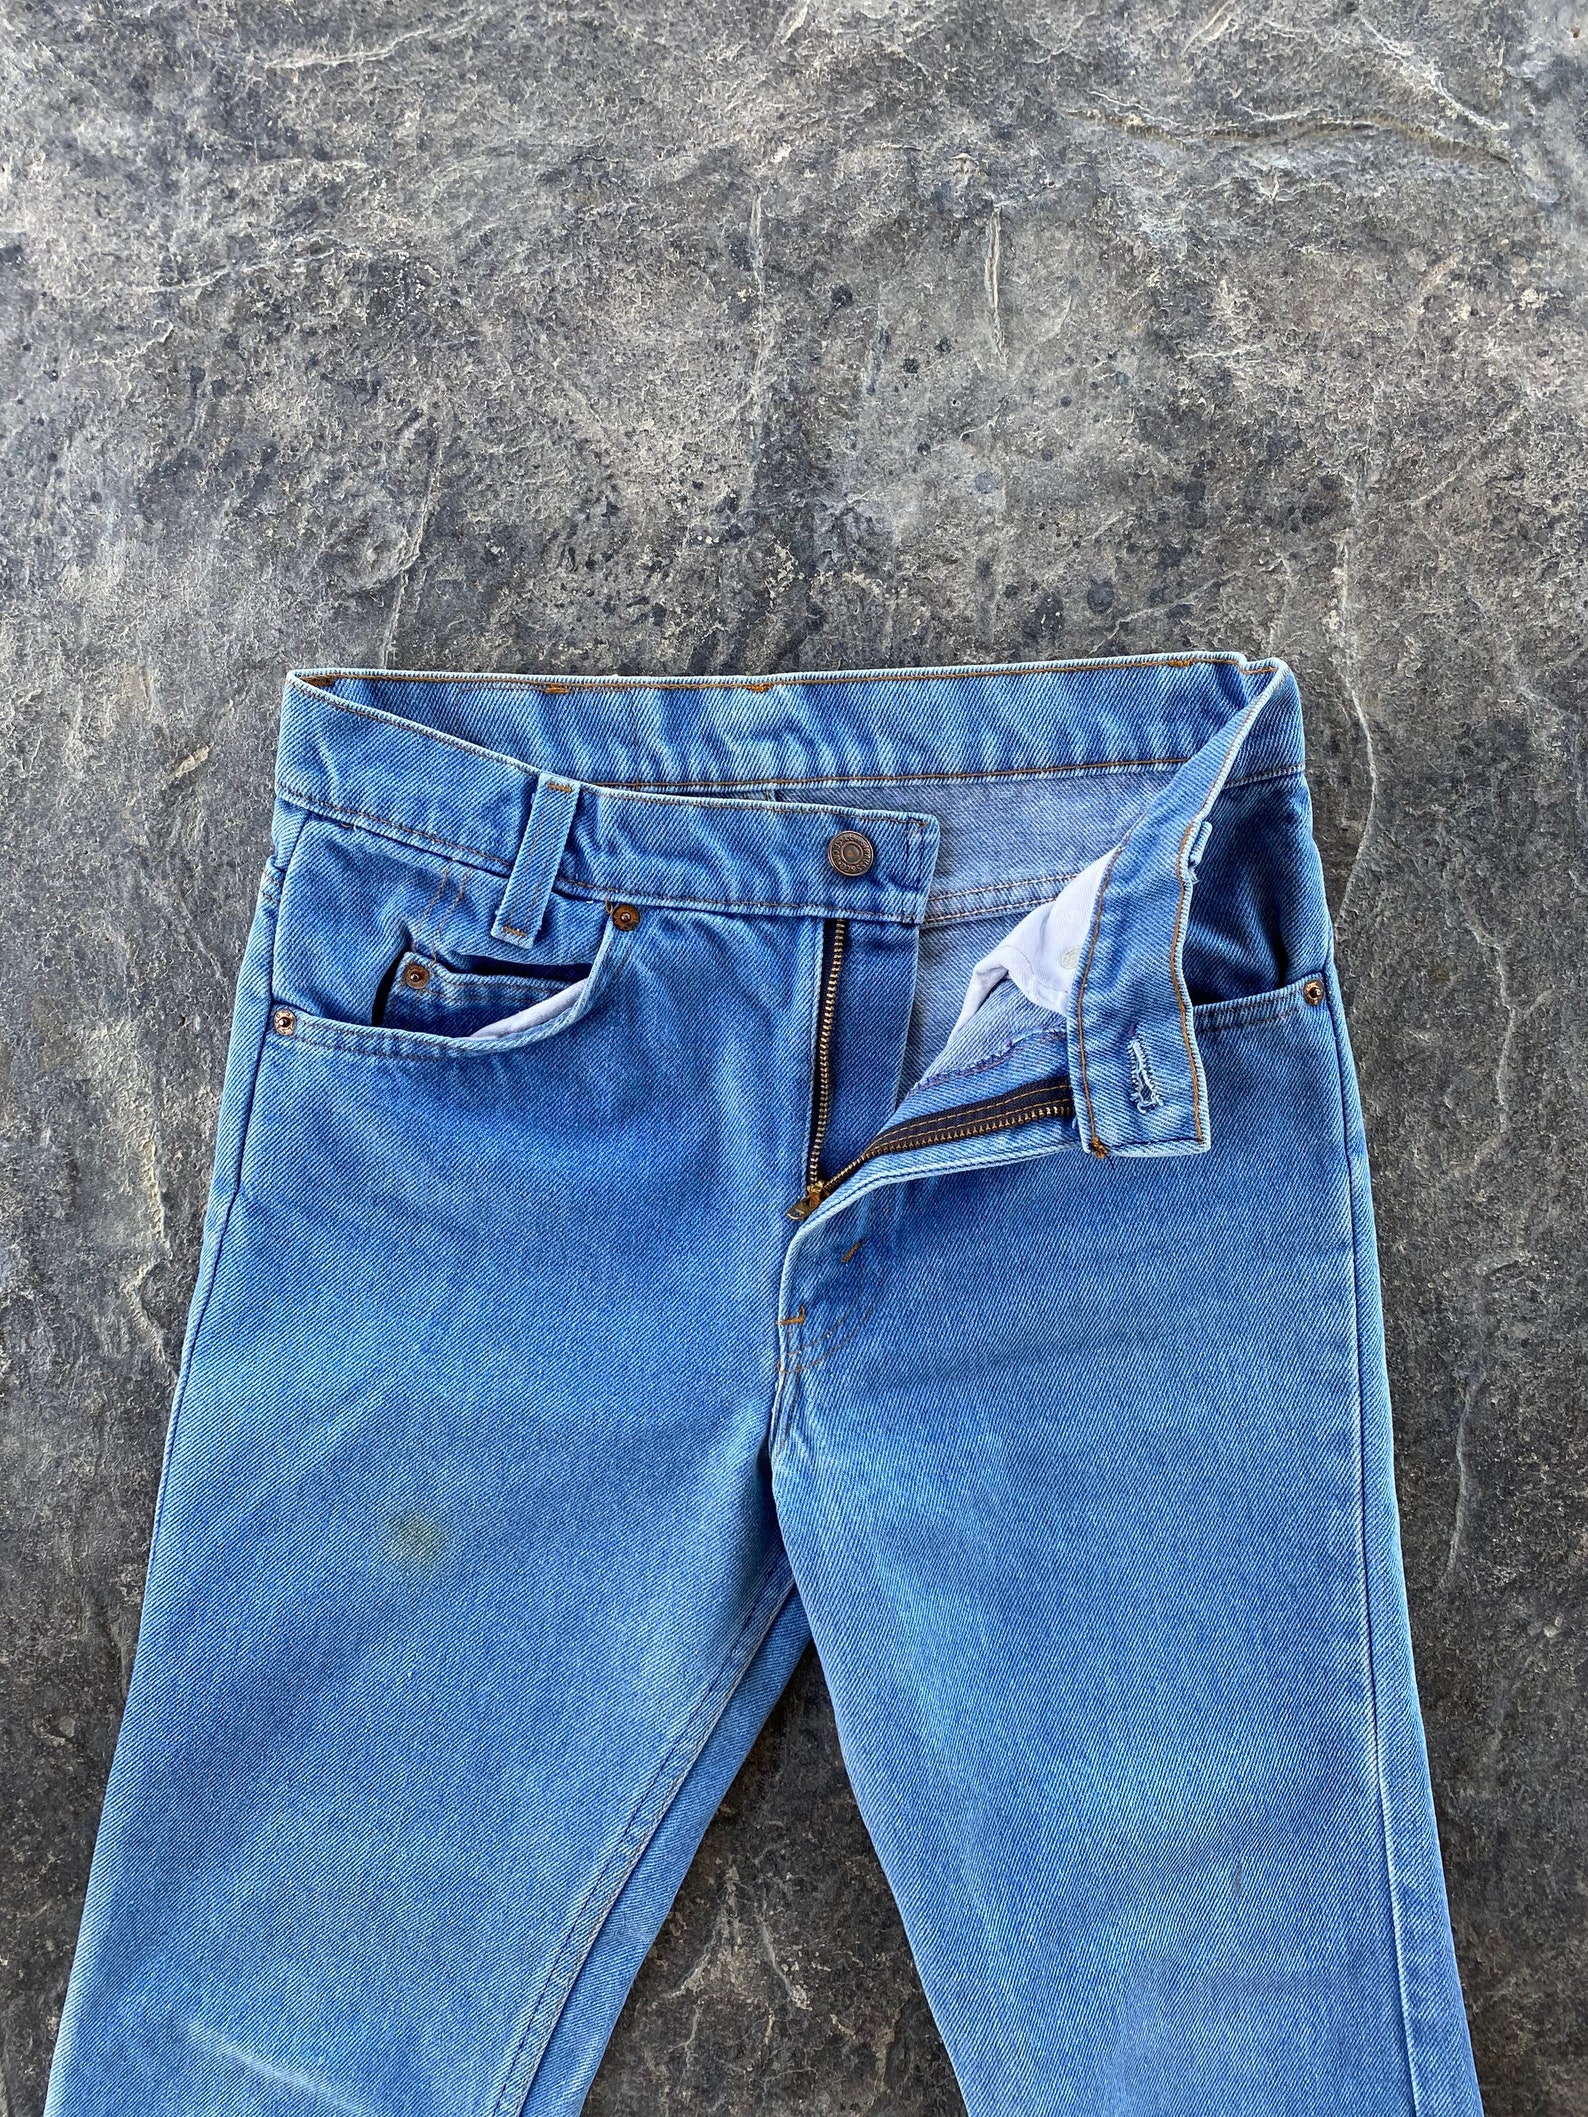 60s Levis 705 Student Fit Orange Tab Jeans Light Blue Vintage | Etsy